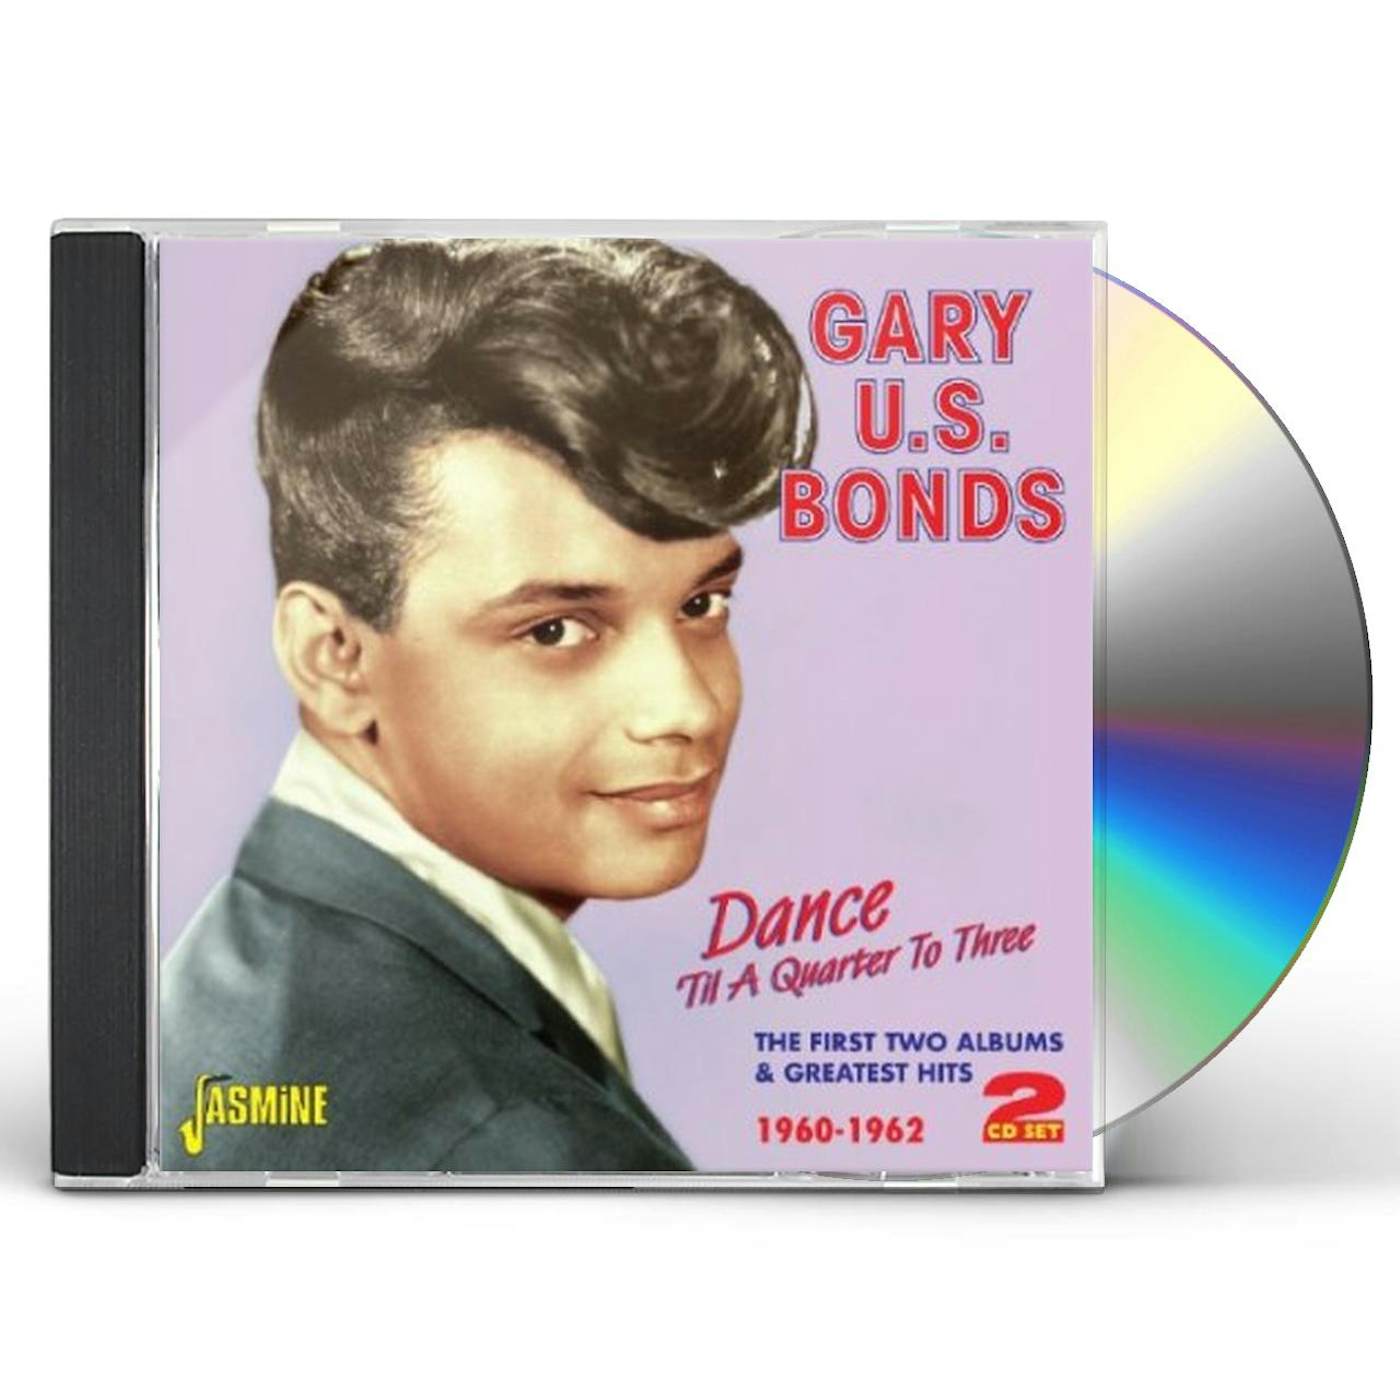 Gary U.S. Bonds DANCE TIL A QUARTER TO THREE:FIRST TWO ALBUMS CD